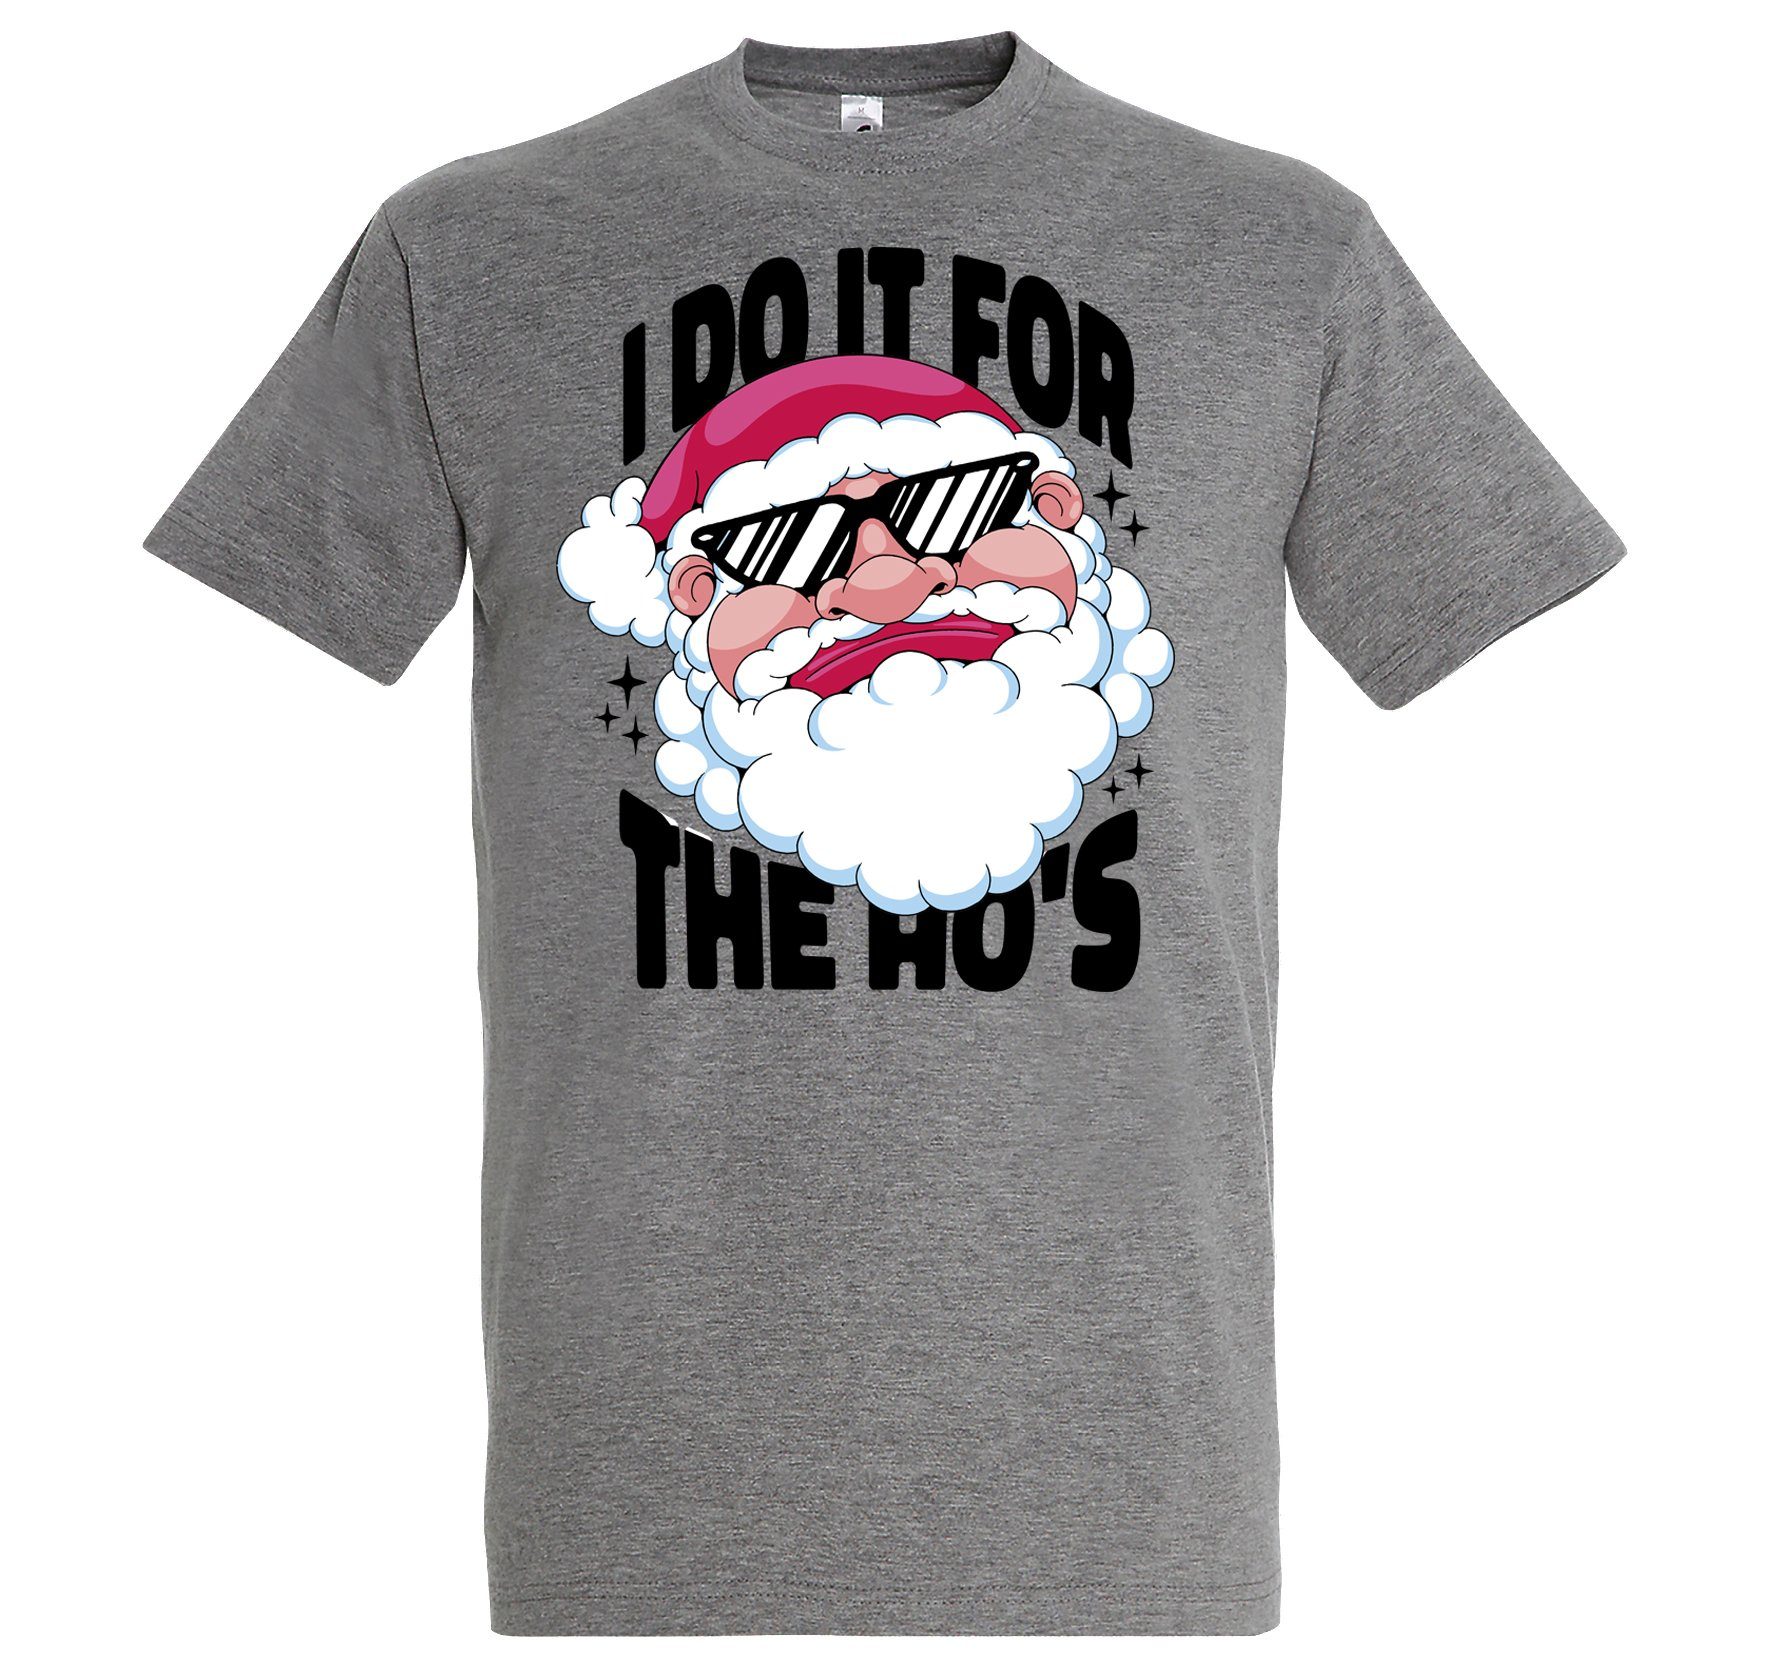 Youth Designz T-Shirt I Do it for the HO's Herren Shirt im Weihnachten Look Grau